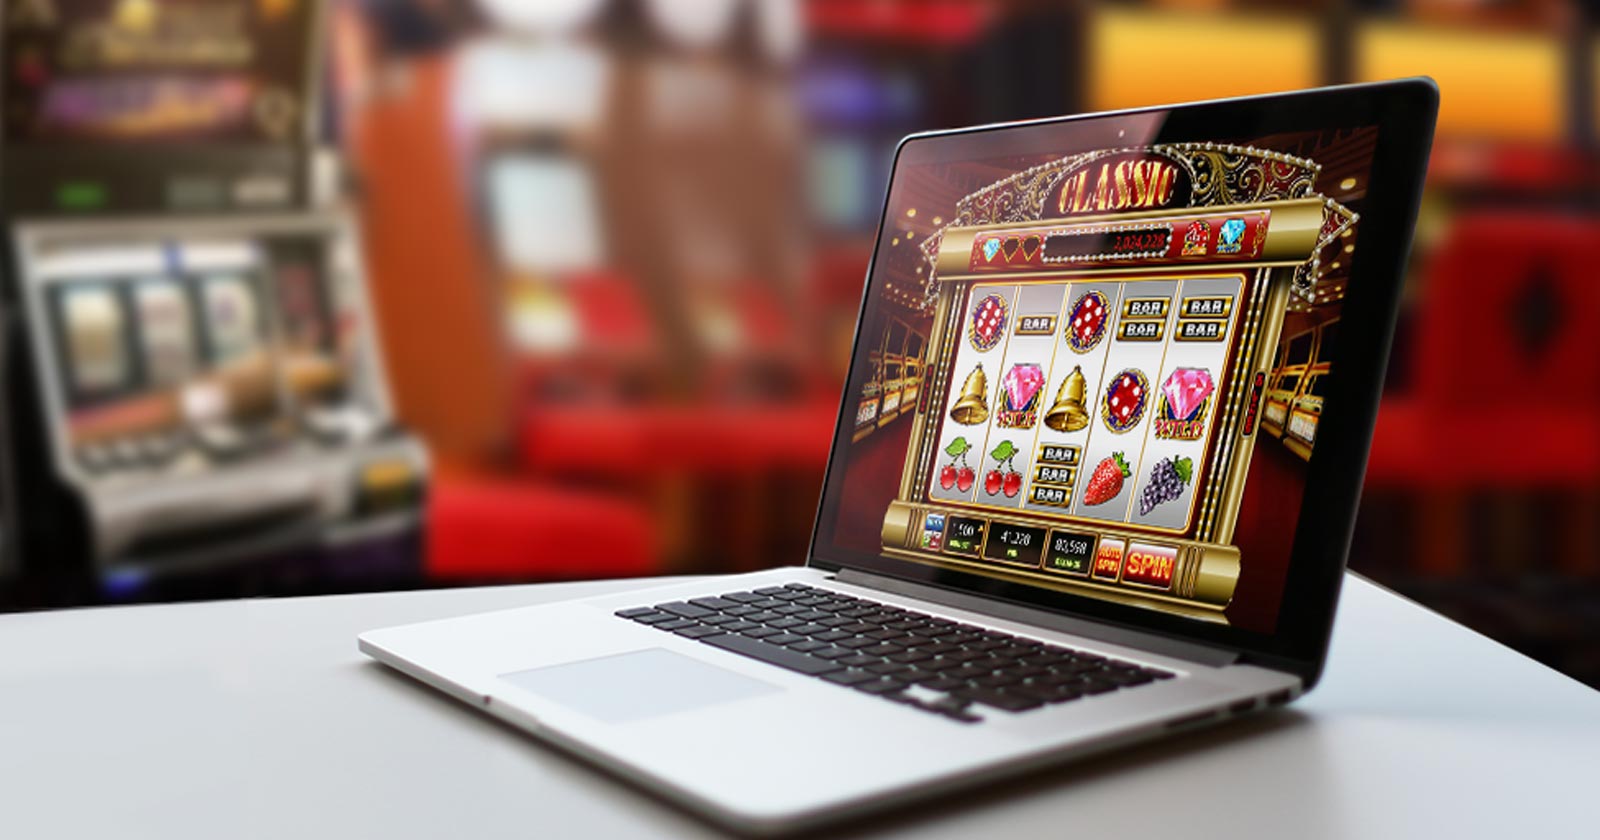 Jackpot Dreams: Chasing Mega Wins in Slot Casinos